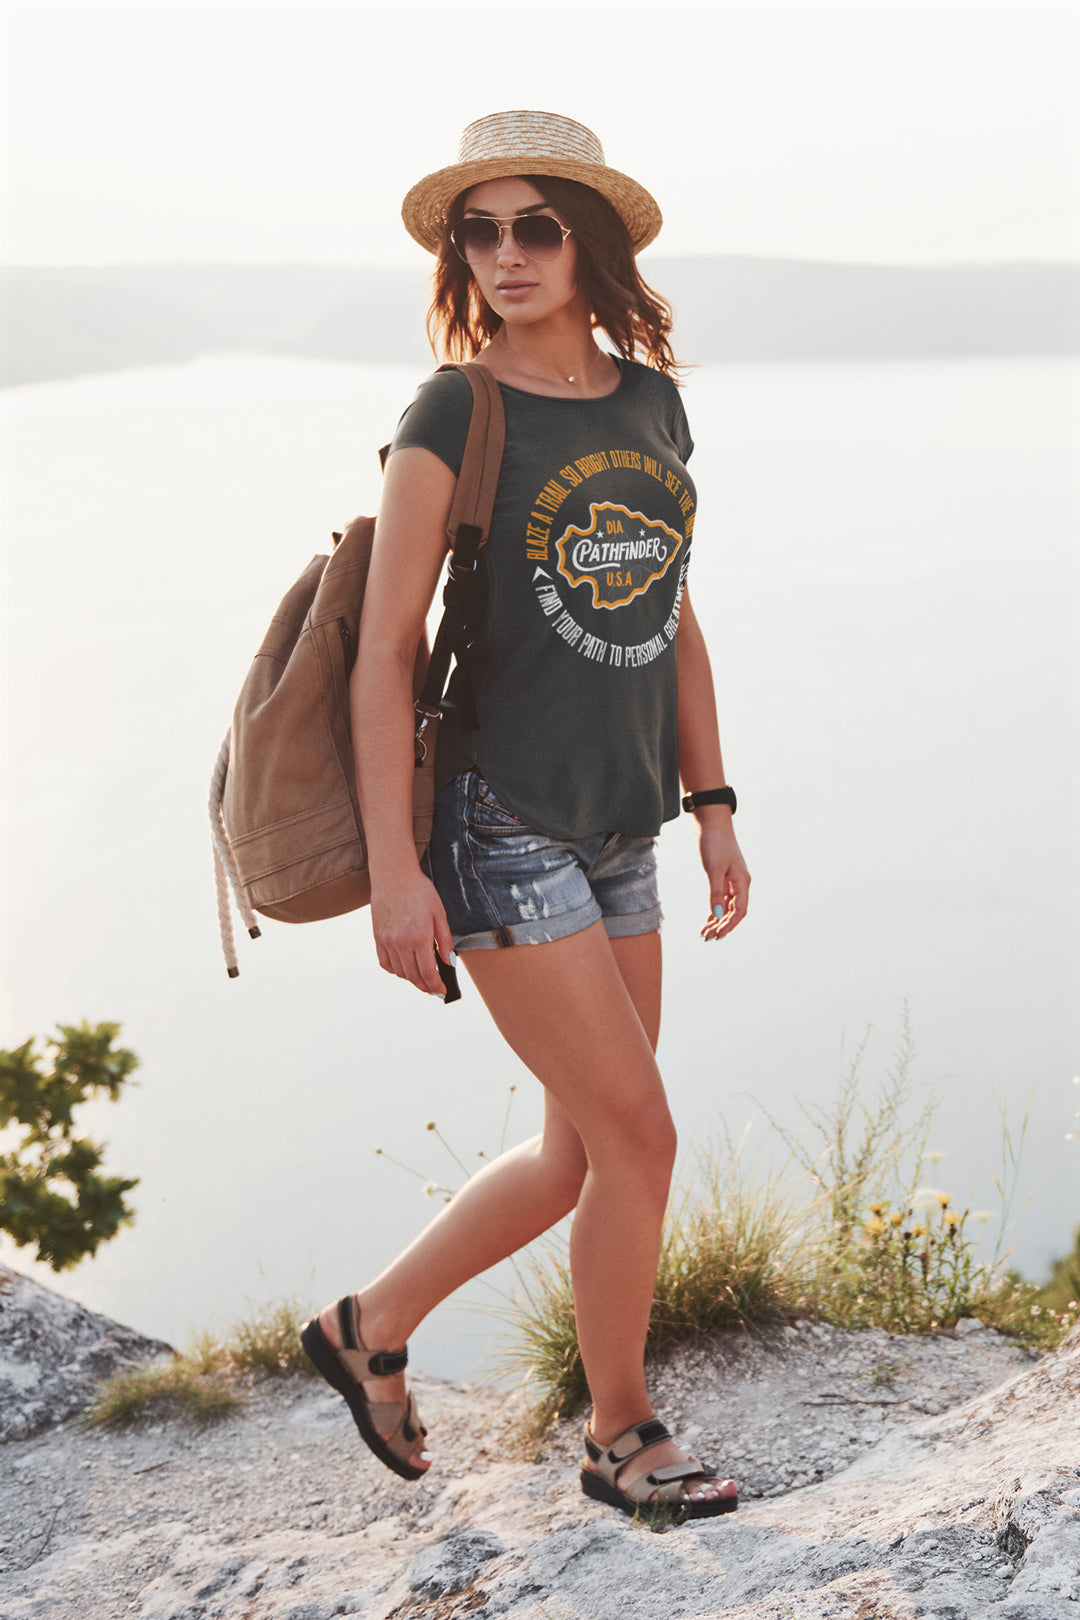 DIA Pathfinder Trailblazer T-Shirt | Heather Forest Green | Men & Women | Blaze Your Own Path to Success | Trailblazing into the Wilderness